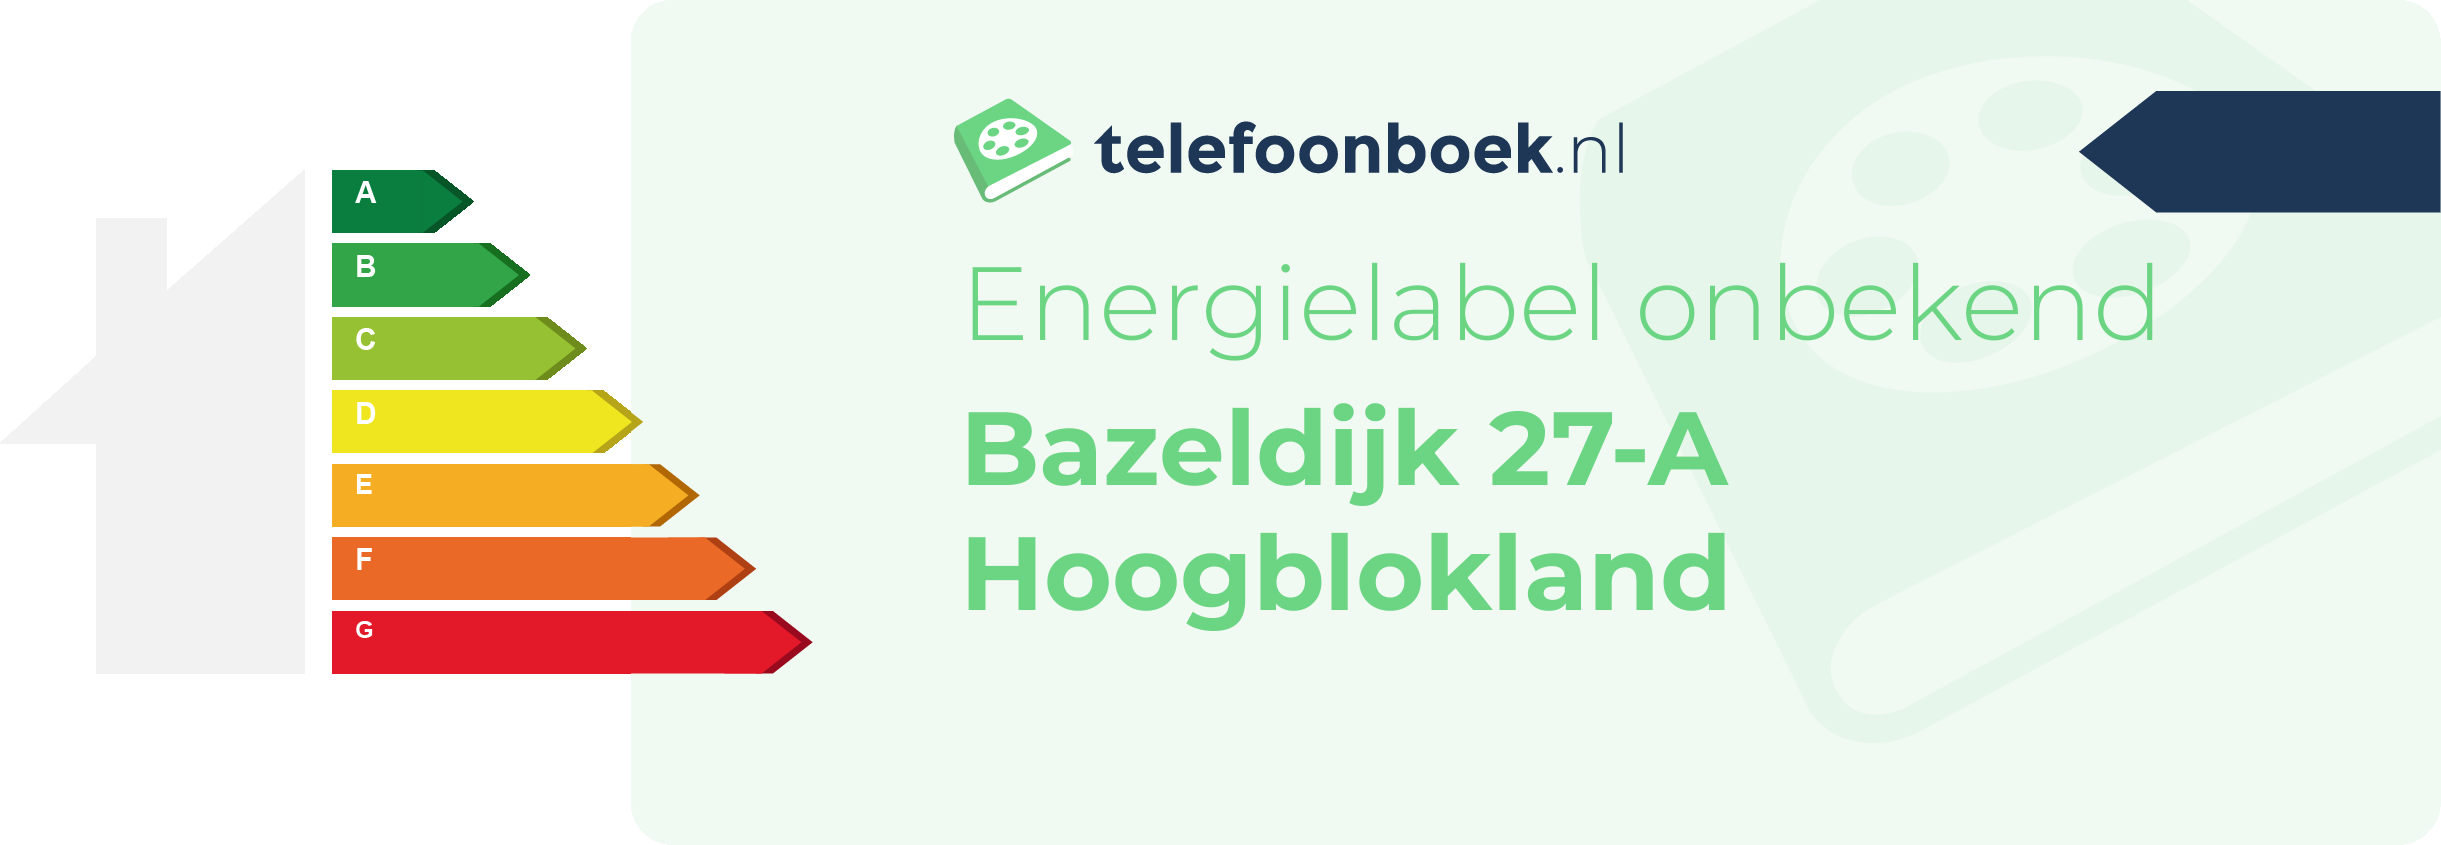 Energielabel Bazeldijk 27-A Hoogblokland